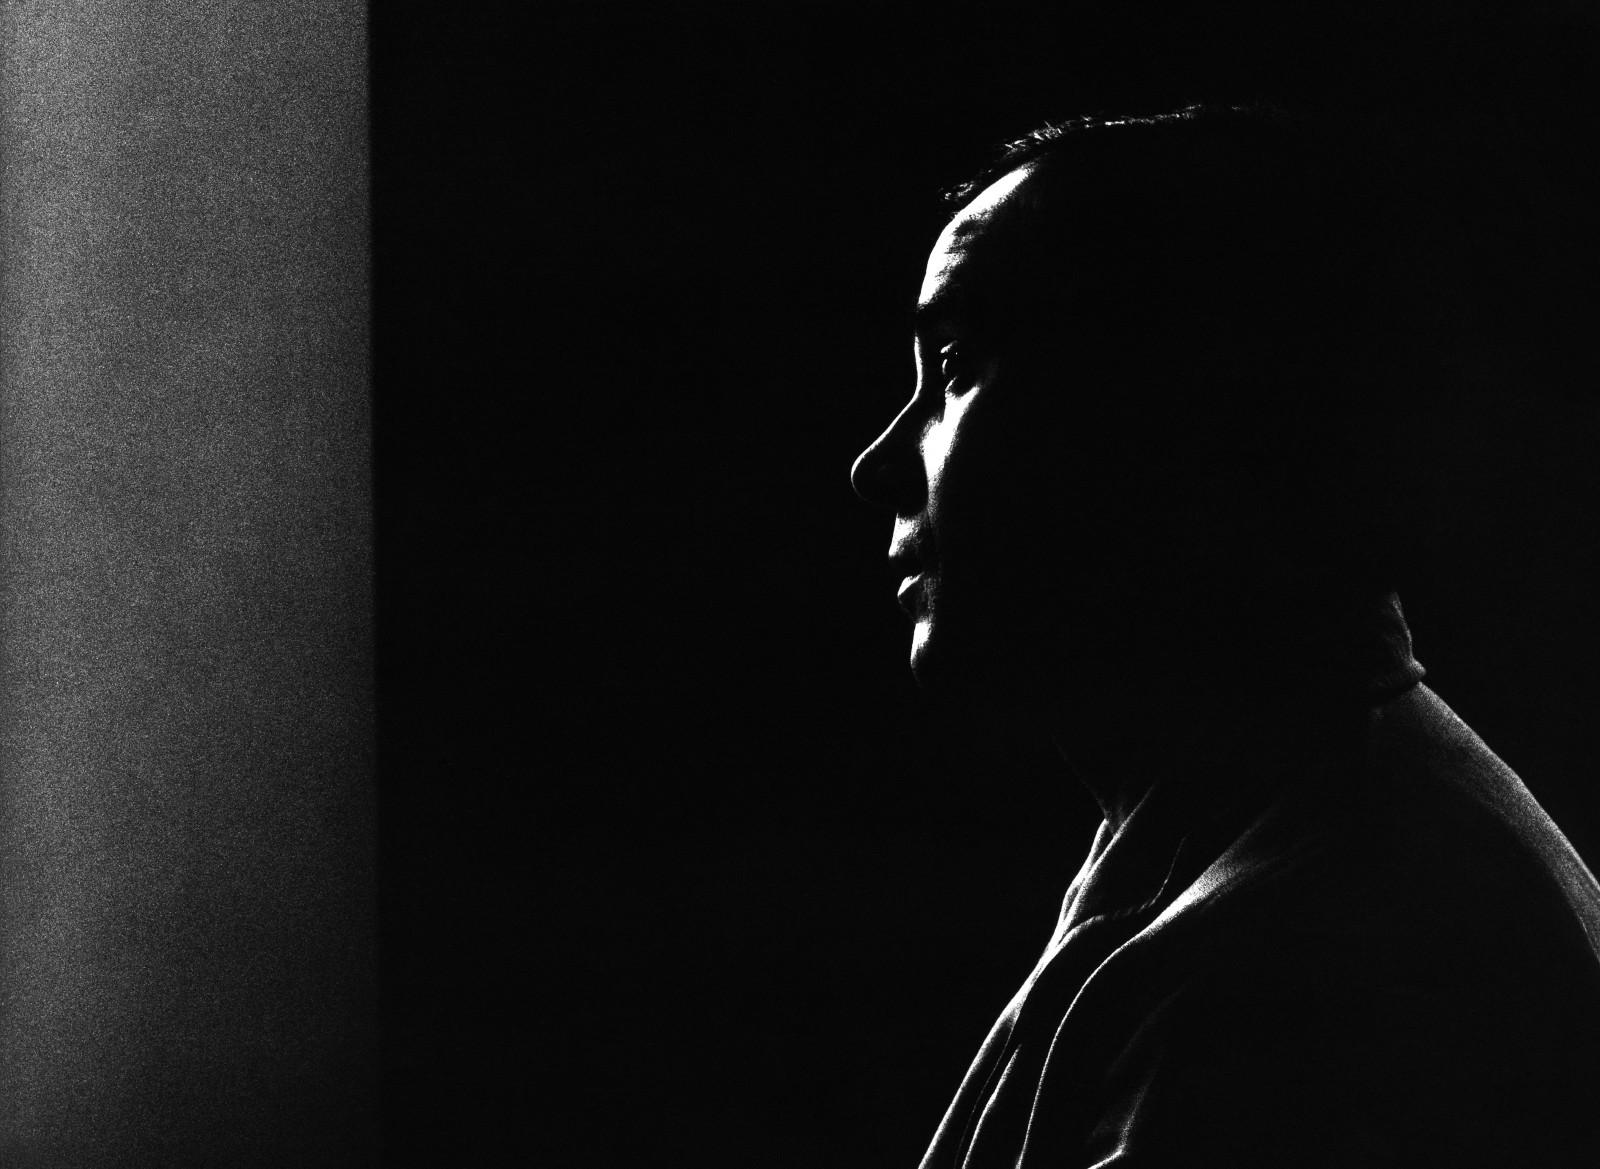 Portrait of Yves Klein